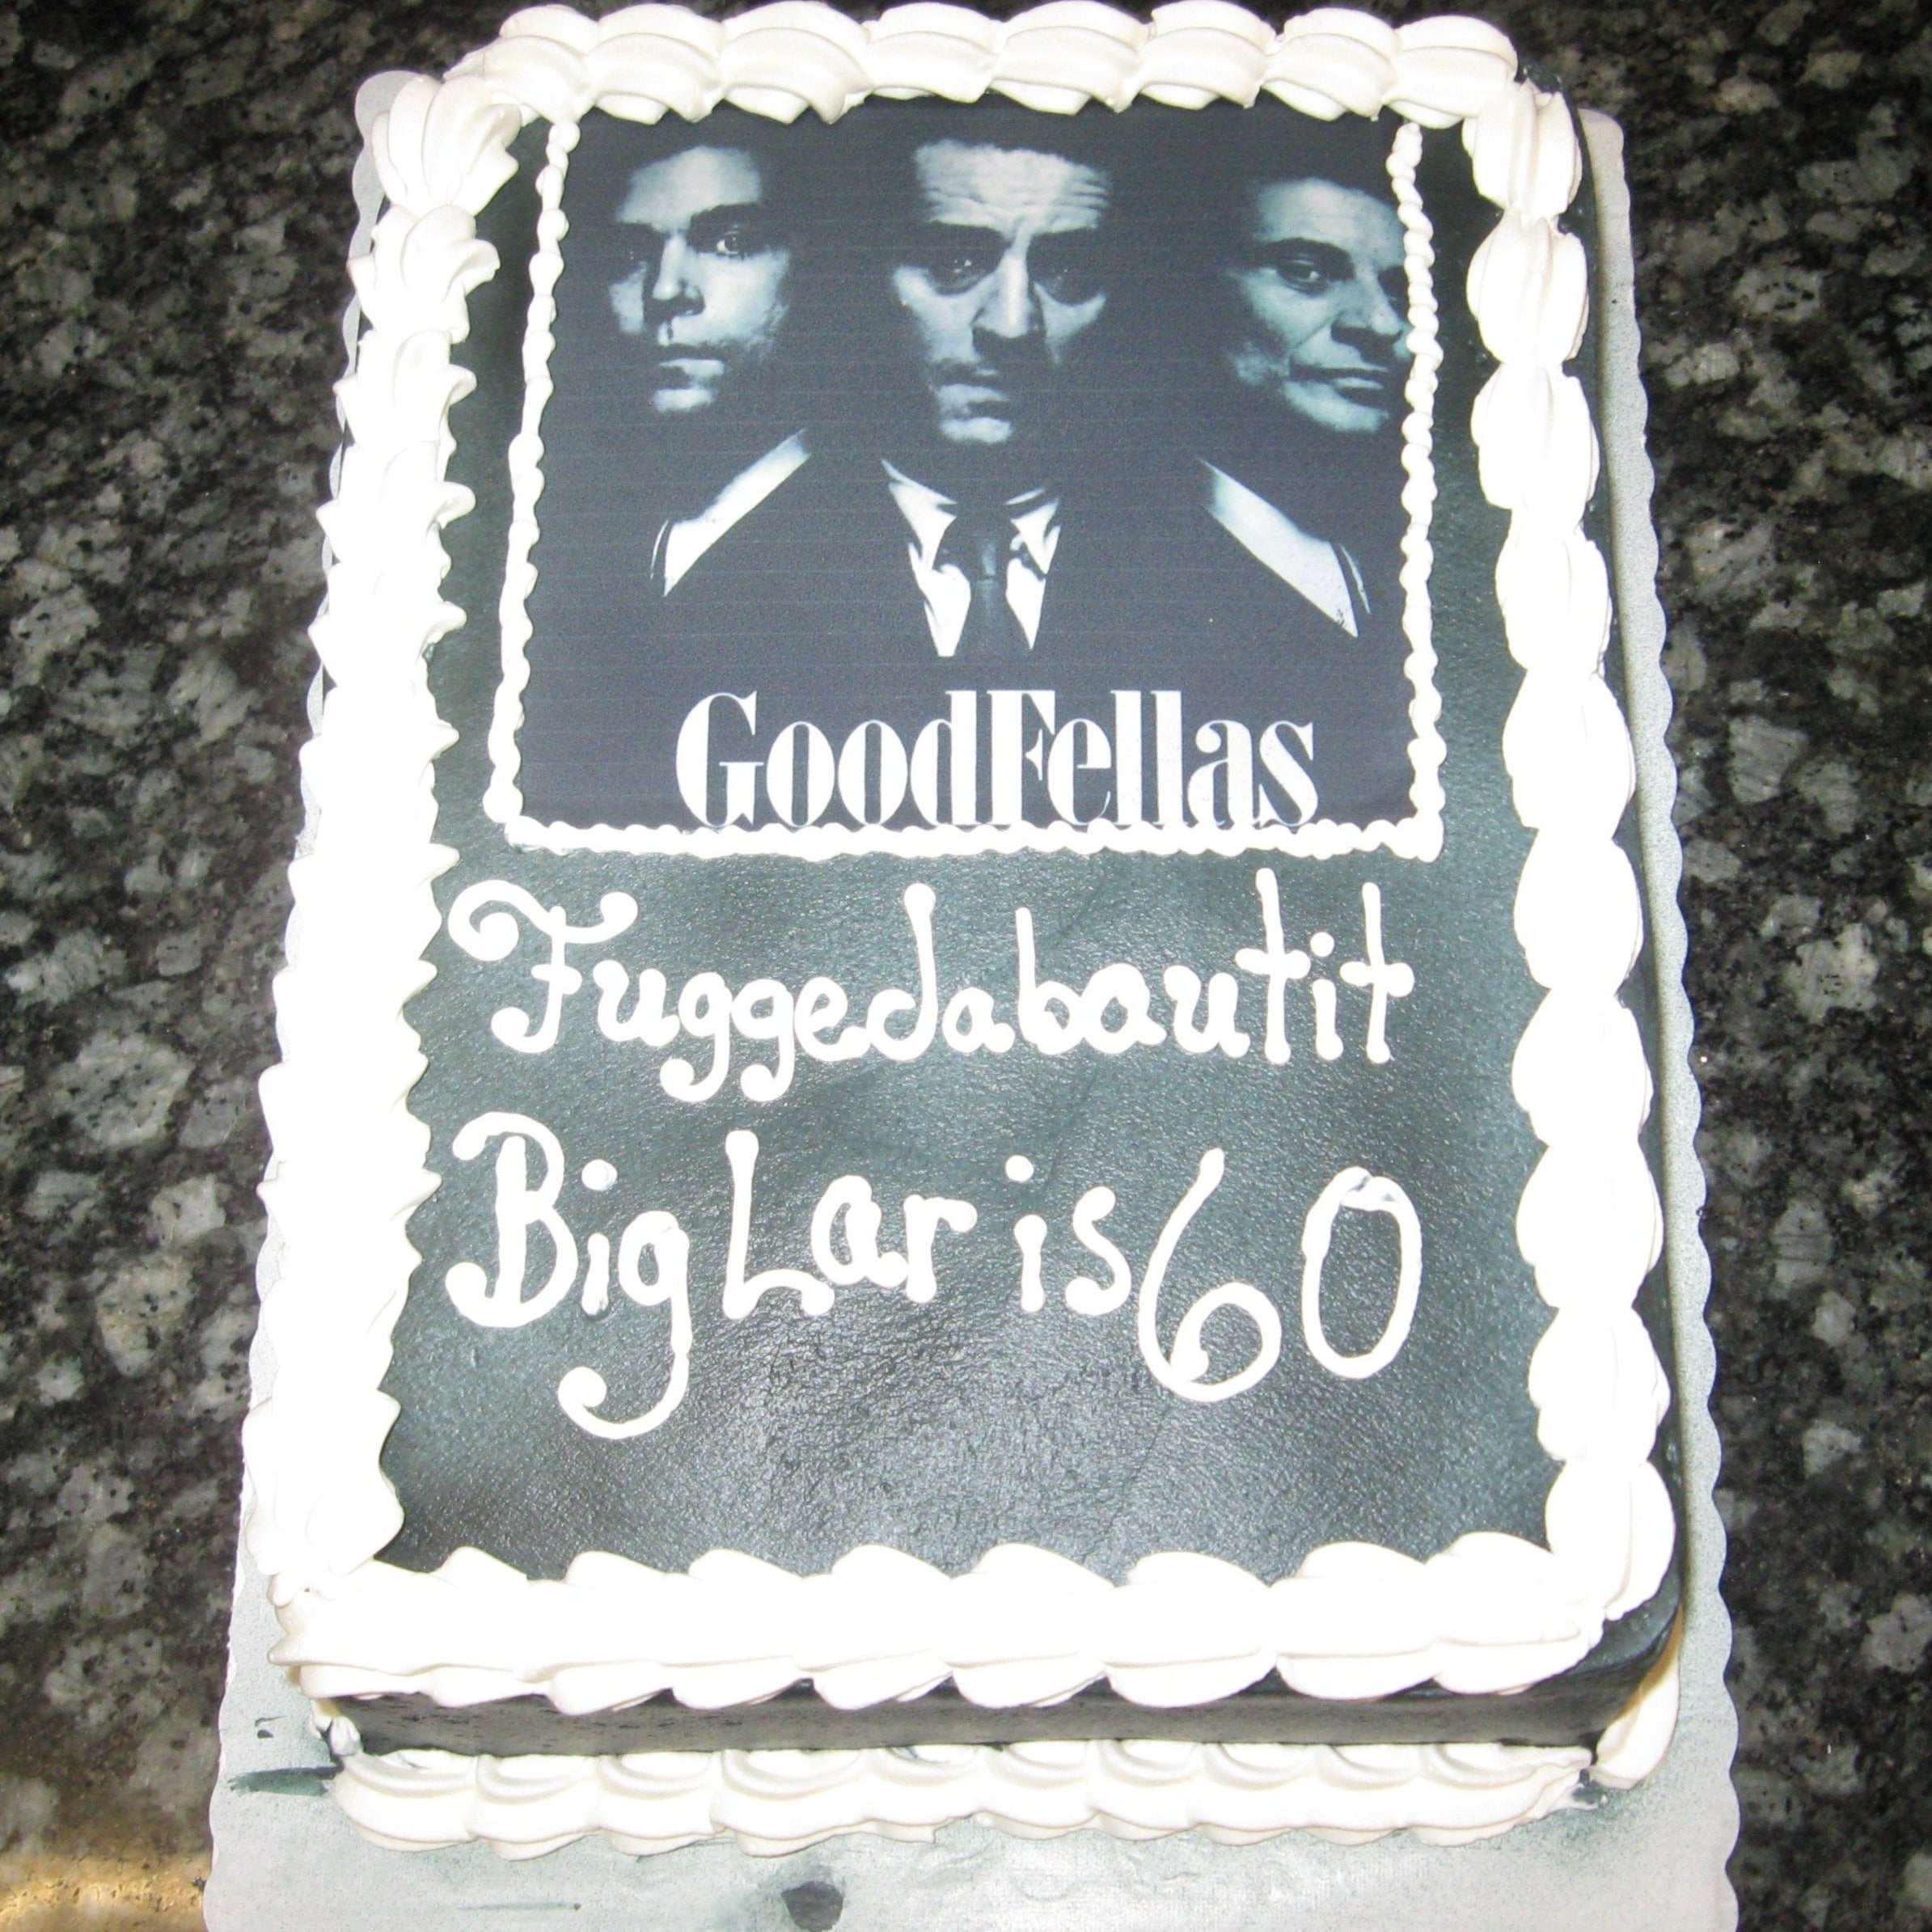 Good Fellas Birthday Cake